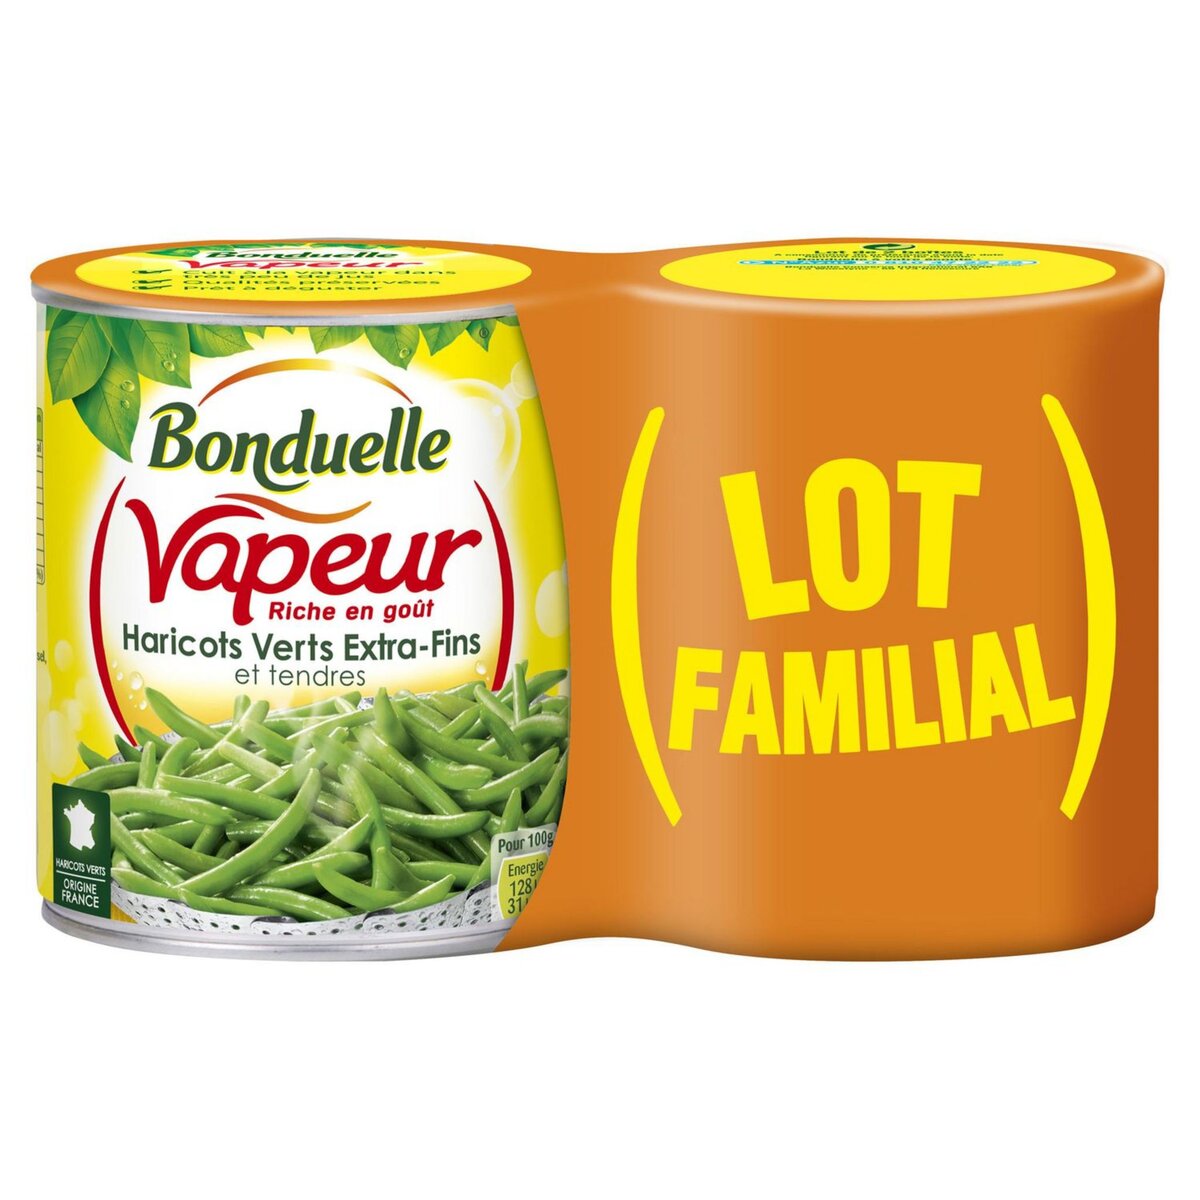 BONDUELLE Bonduelle Vapeur haricots verts extra fins 2x440g 2x440g